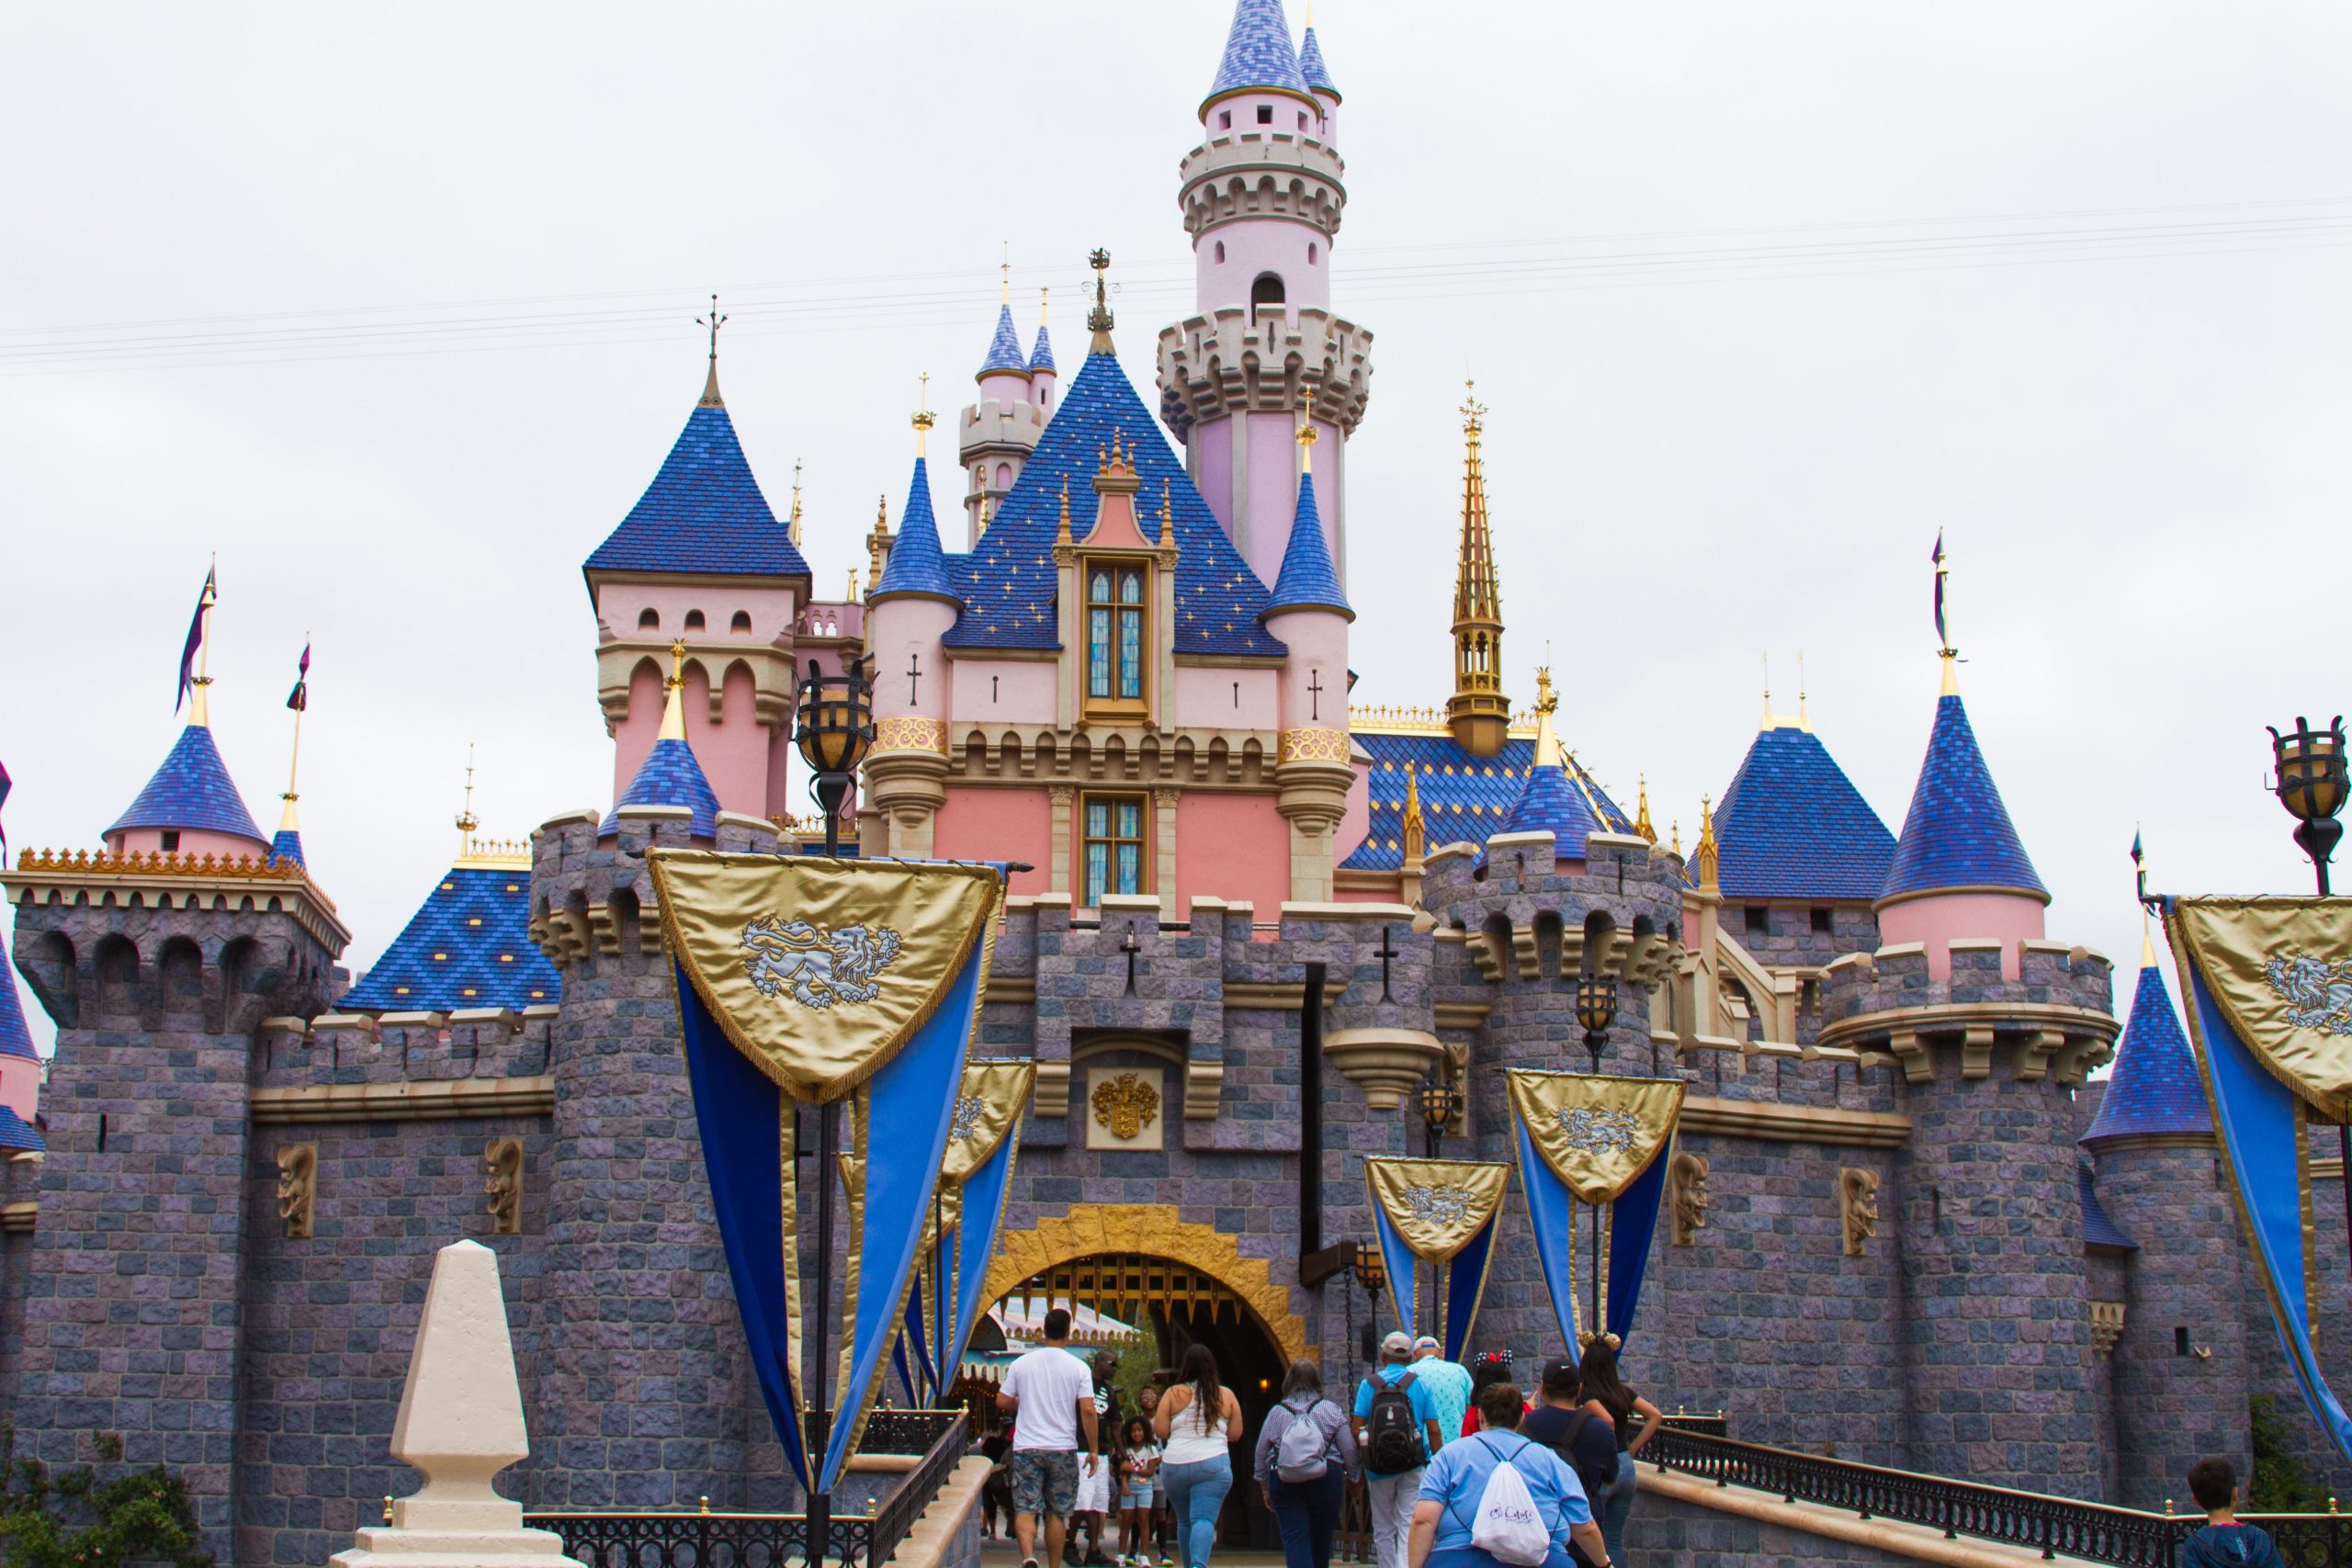 Disneyland Sleeping Beauty Castle